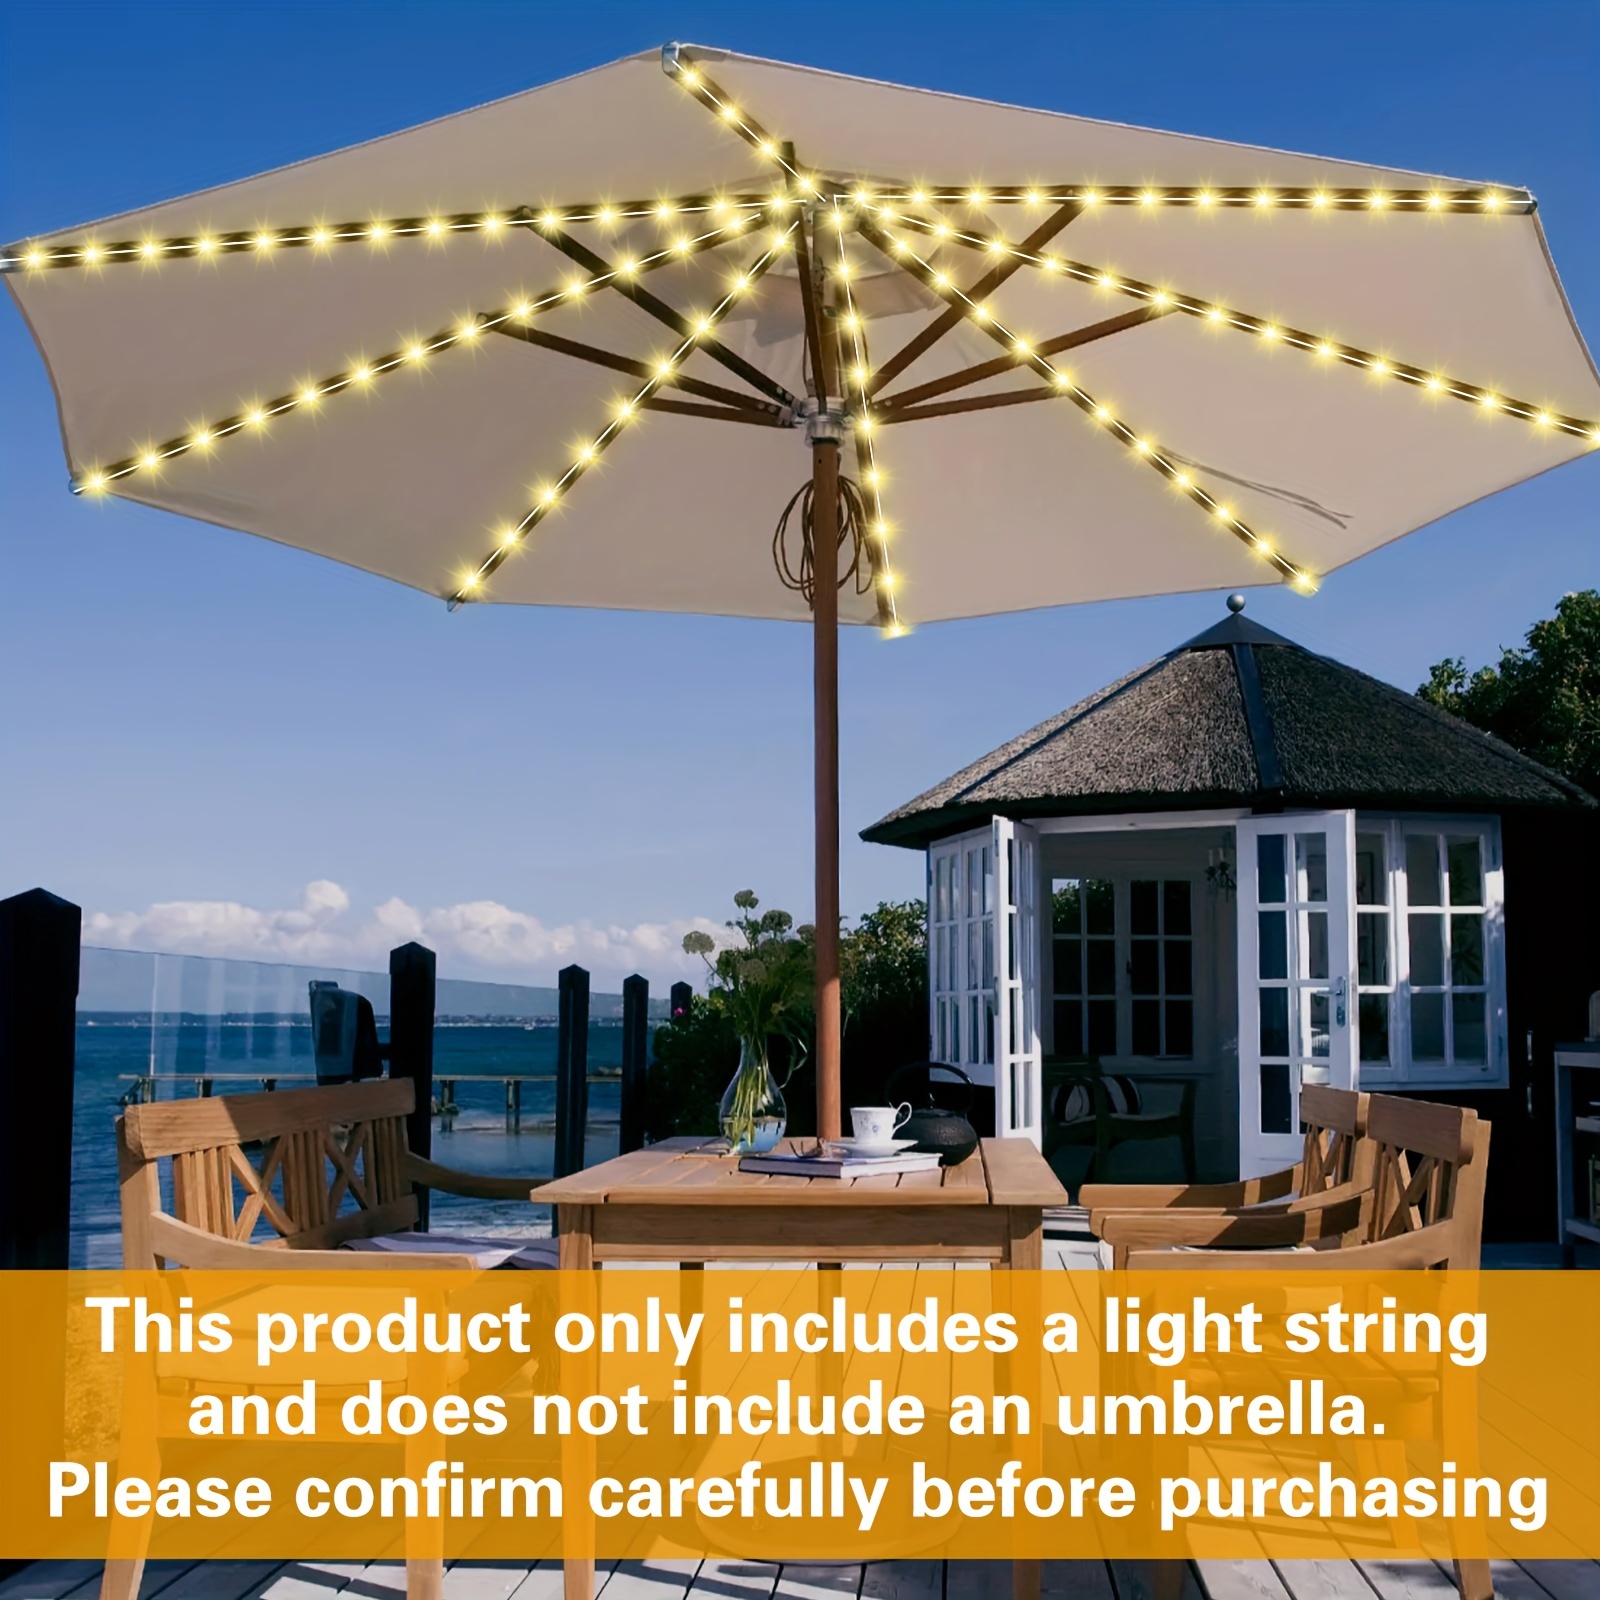 

1pc Solar Powered Umbrella Lights Outdoor Lighting With Remote Control, 8 Mode 104led Fairy Light For Garden Outdoor Garden Decor Festival Atmosphere Decoration